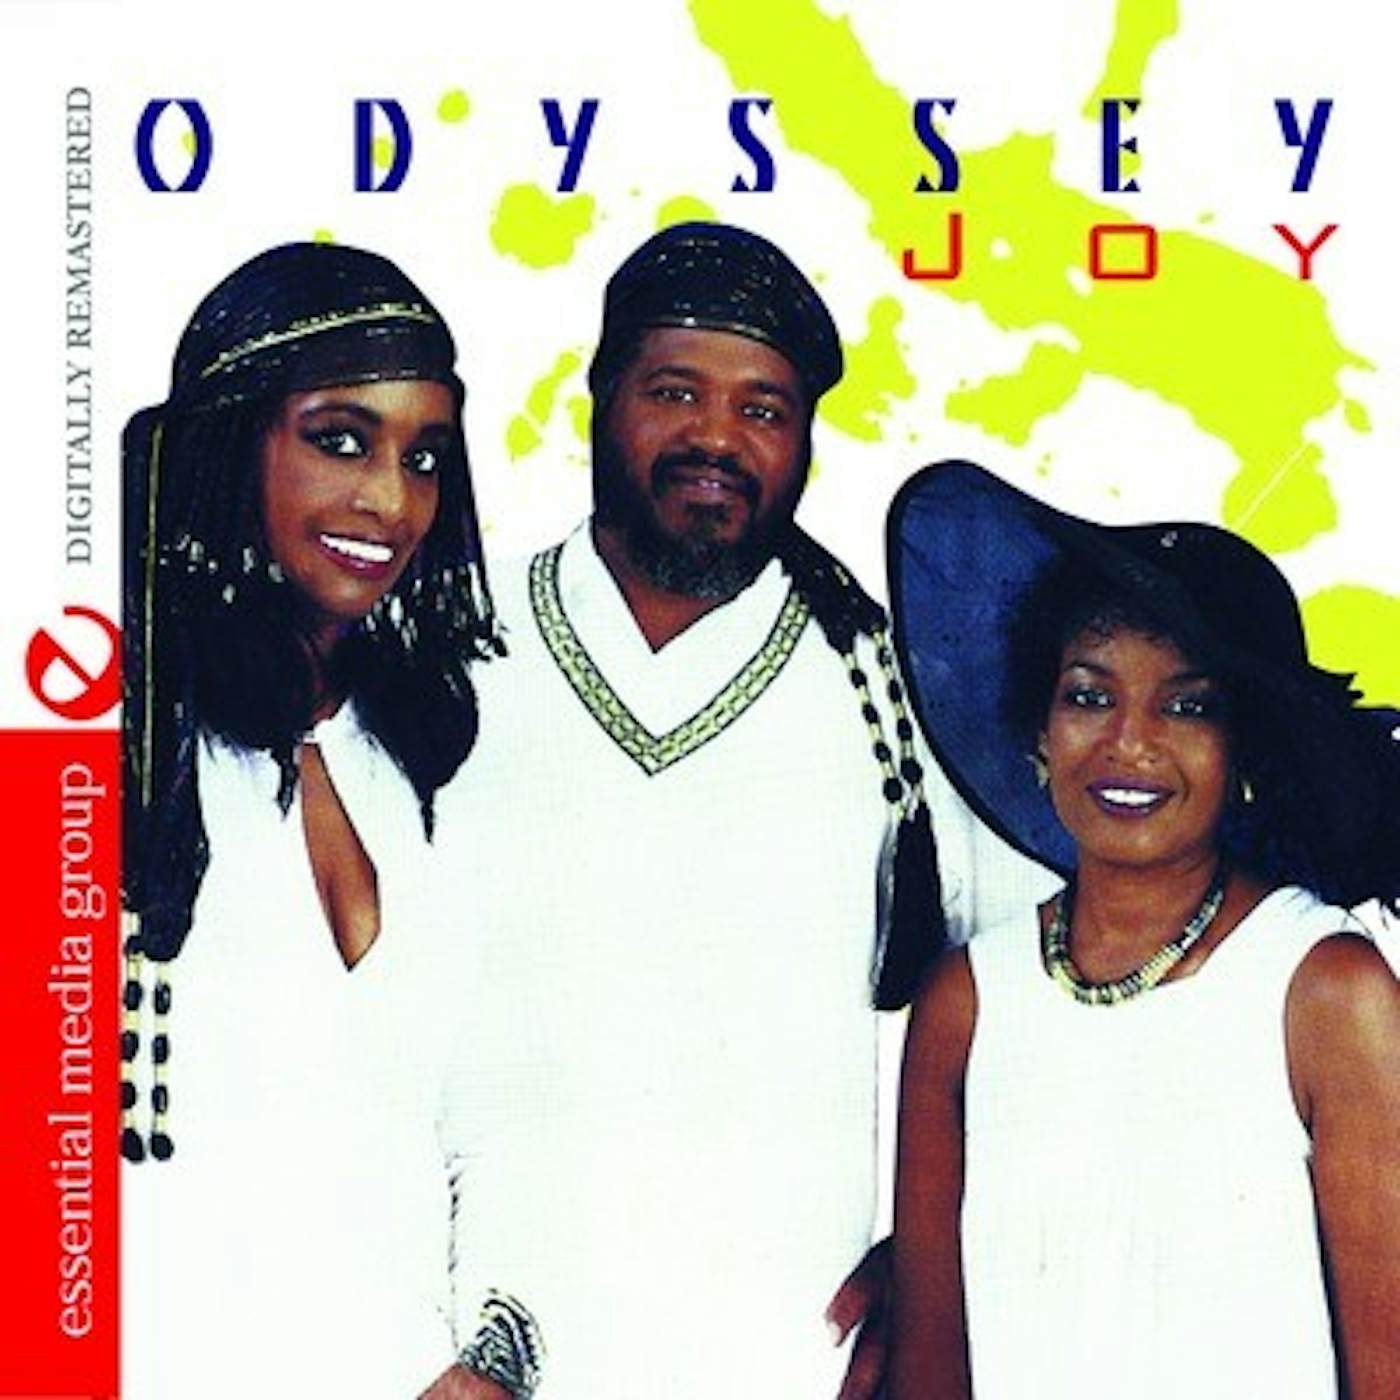 Odyssey JOY CD